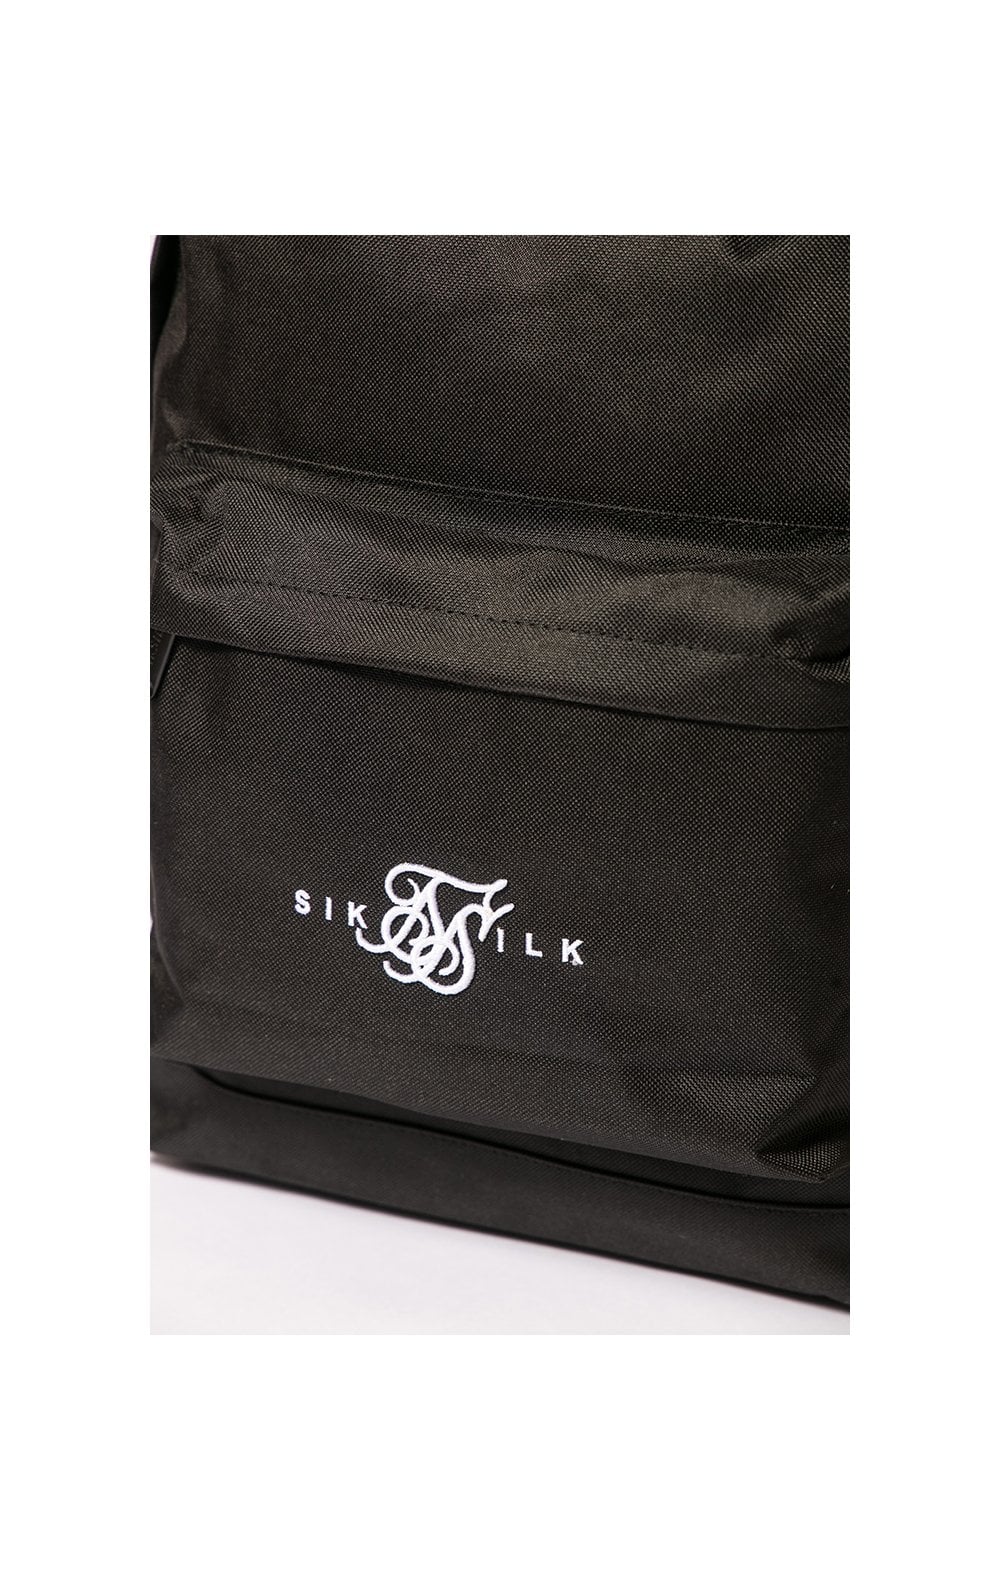 SikSilk Dual Logo Backpack - Black & White (1)